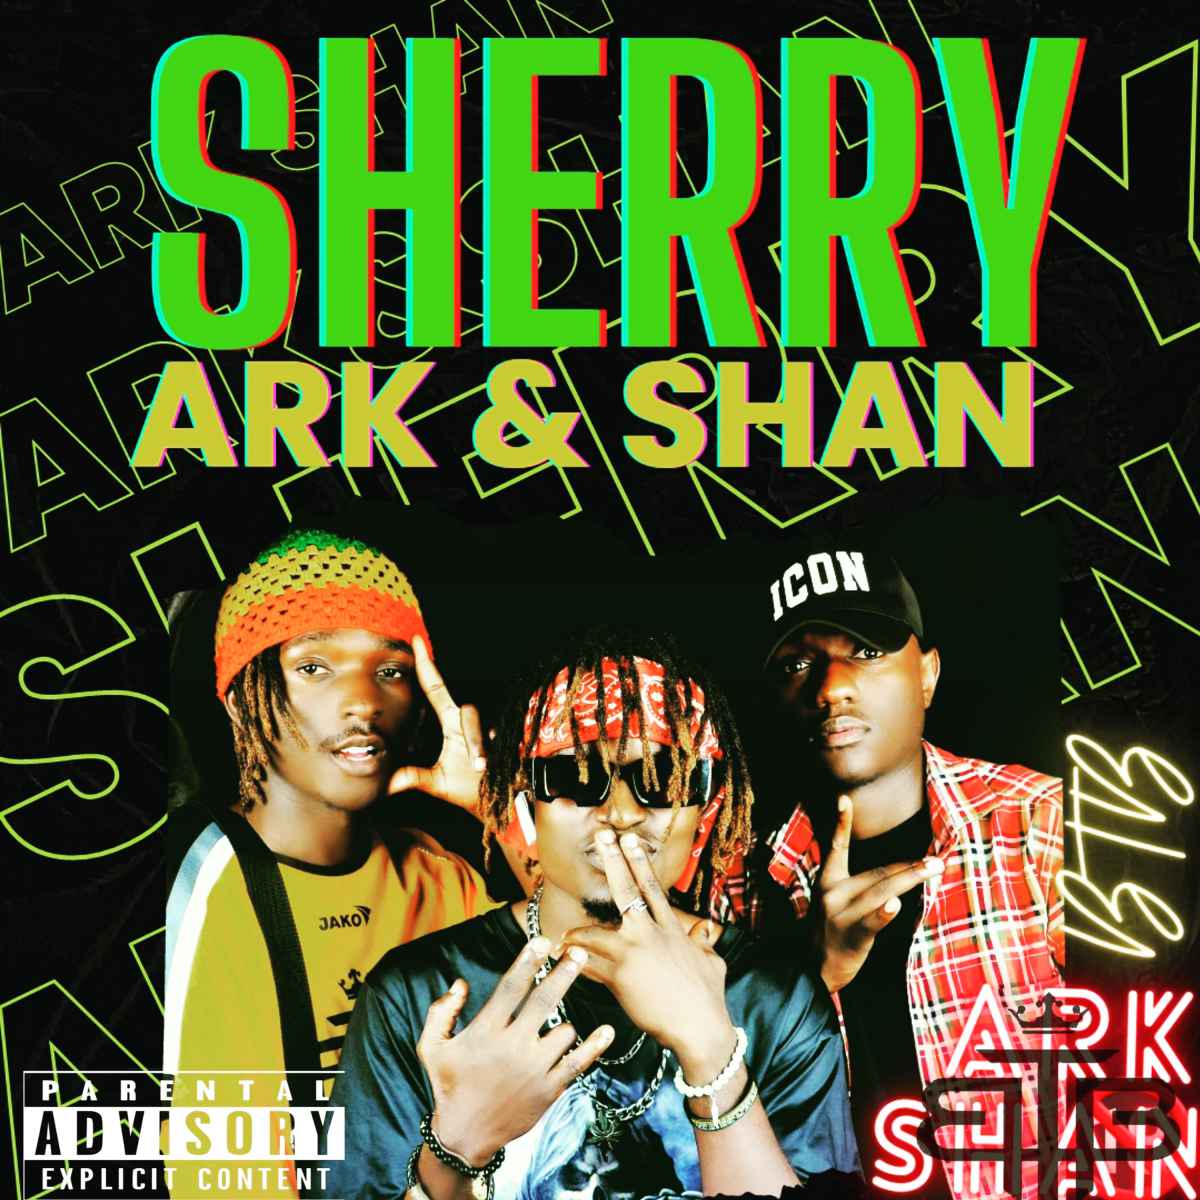 Sherry by Btb Ark & Shan